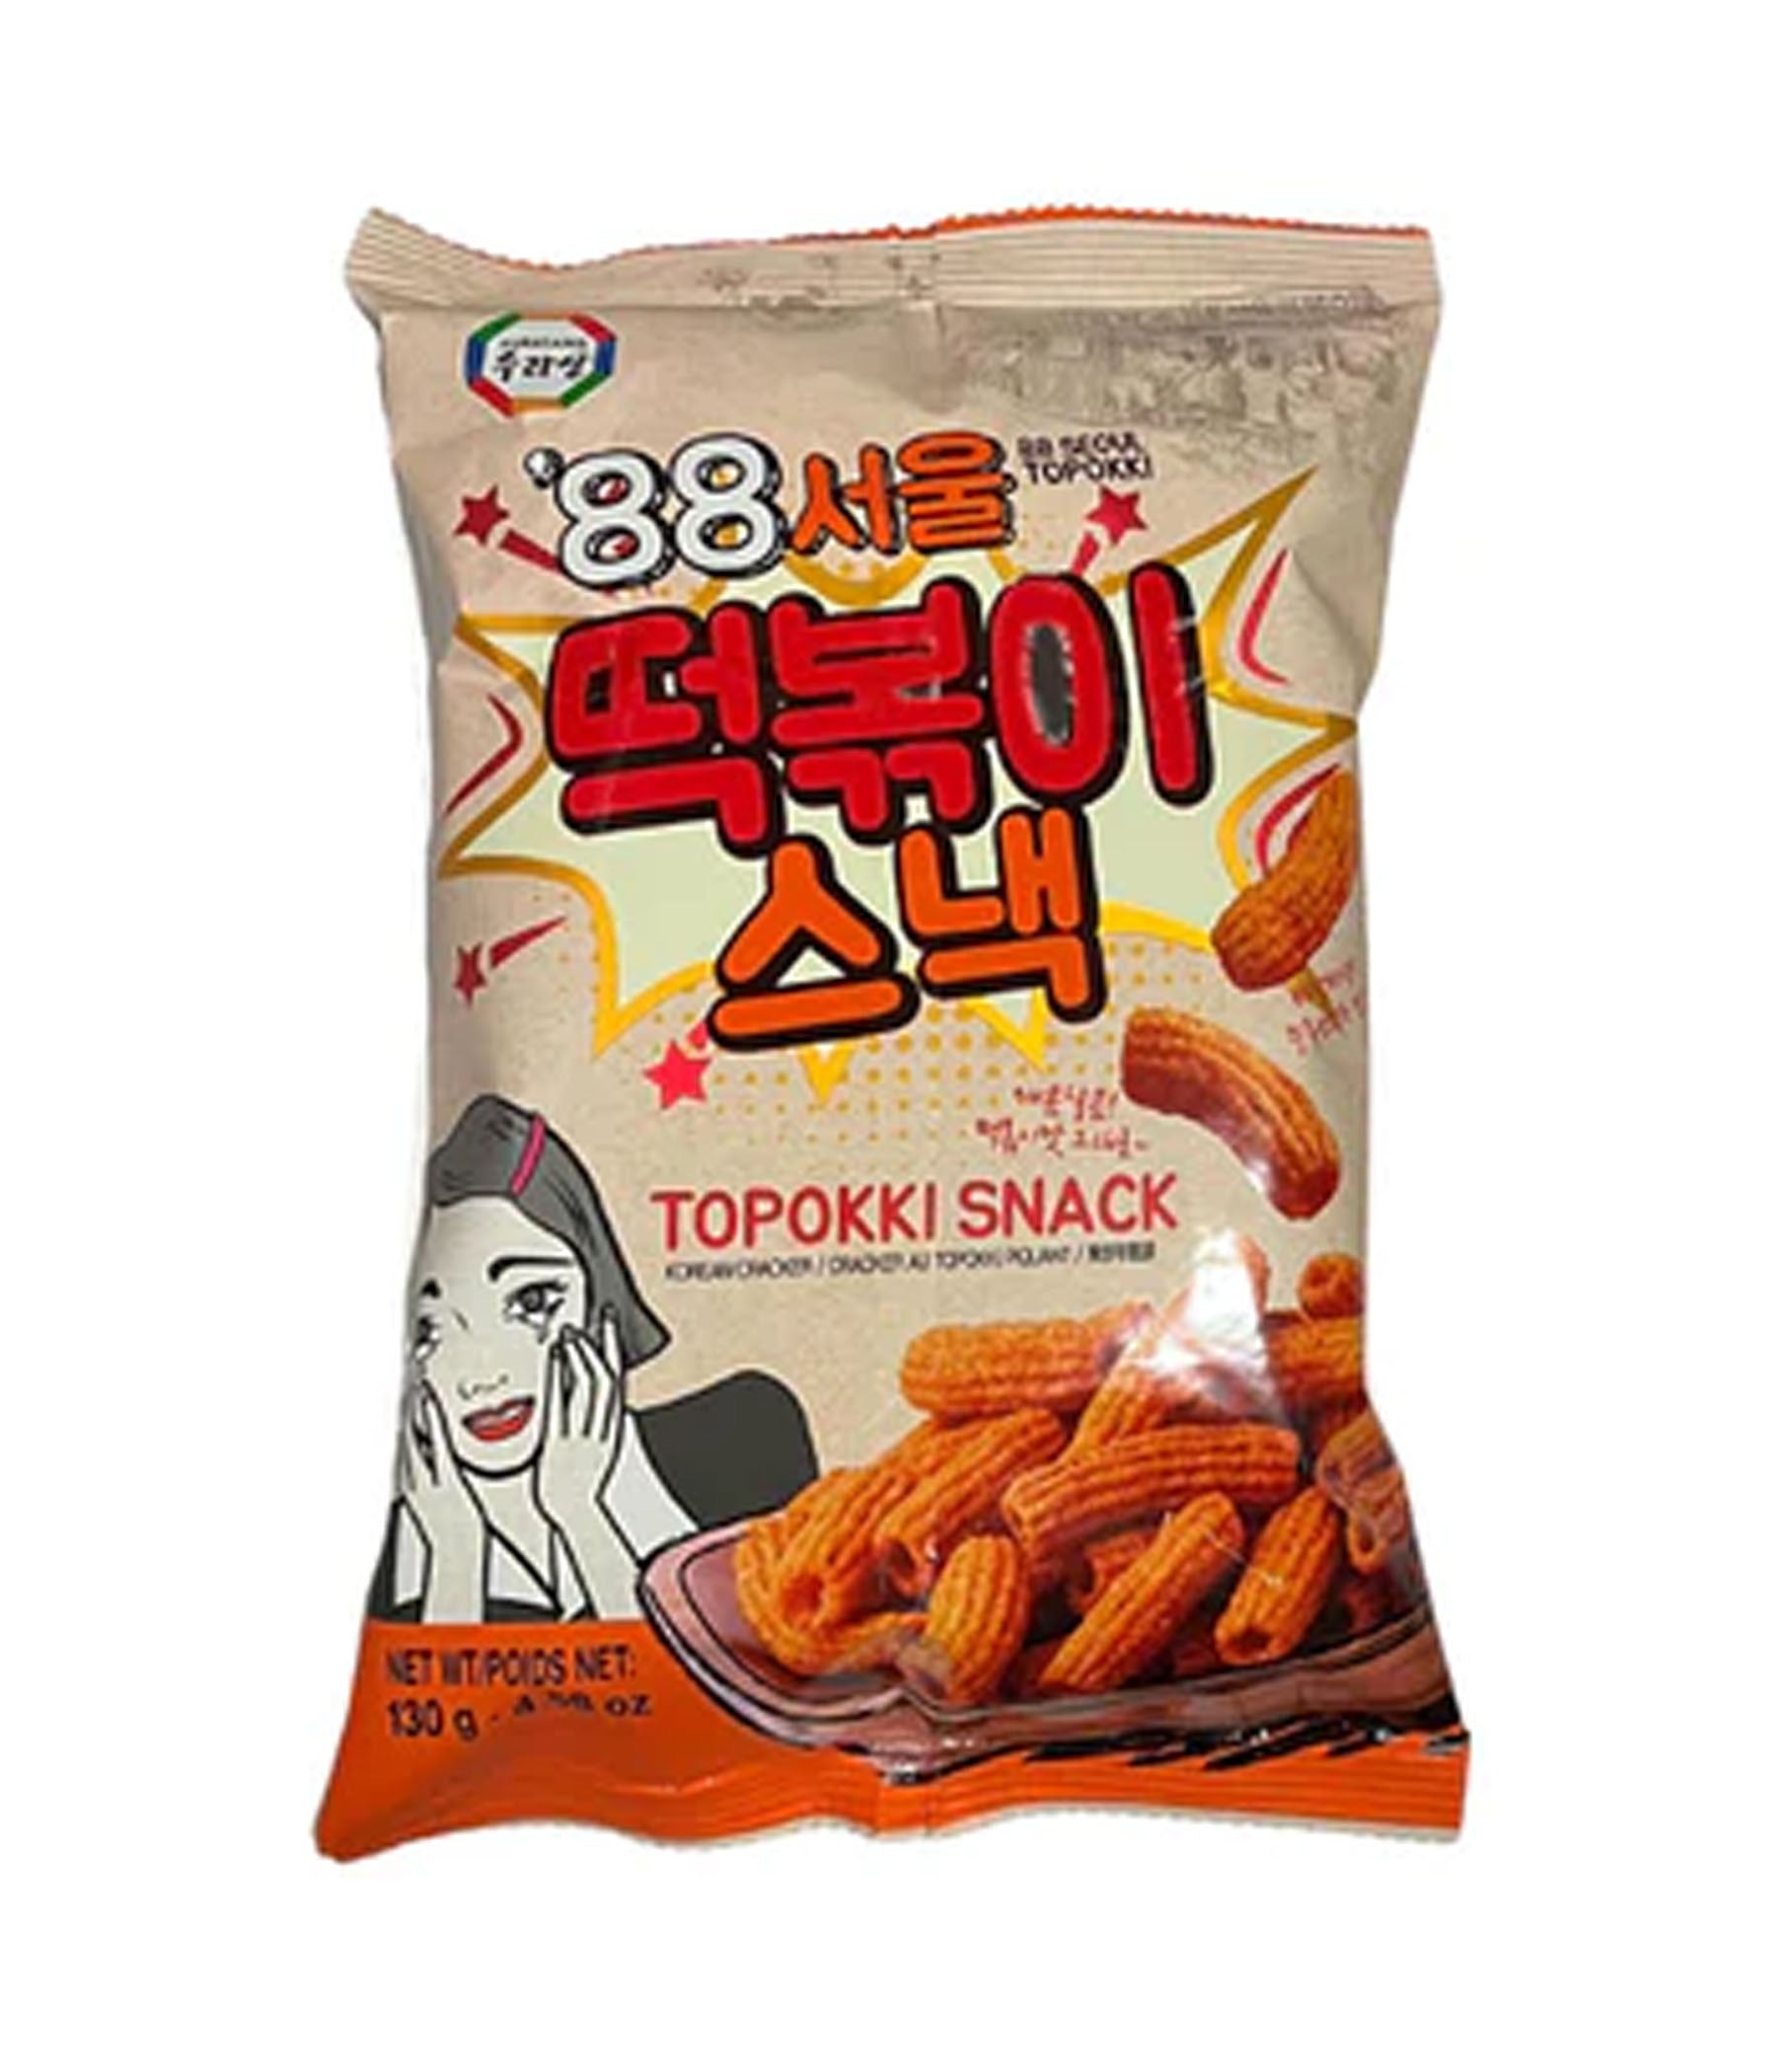 Surasang 88 Seoul Topokki Snack - 130g